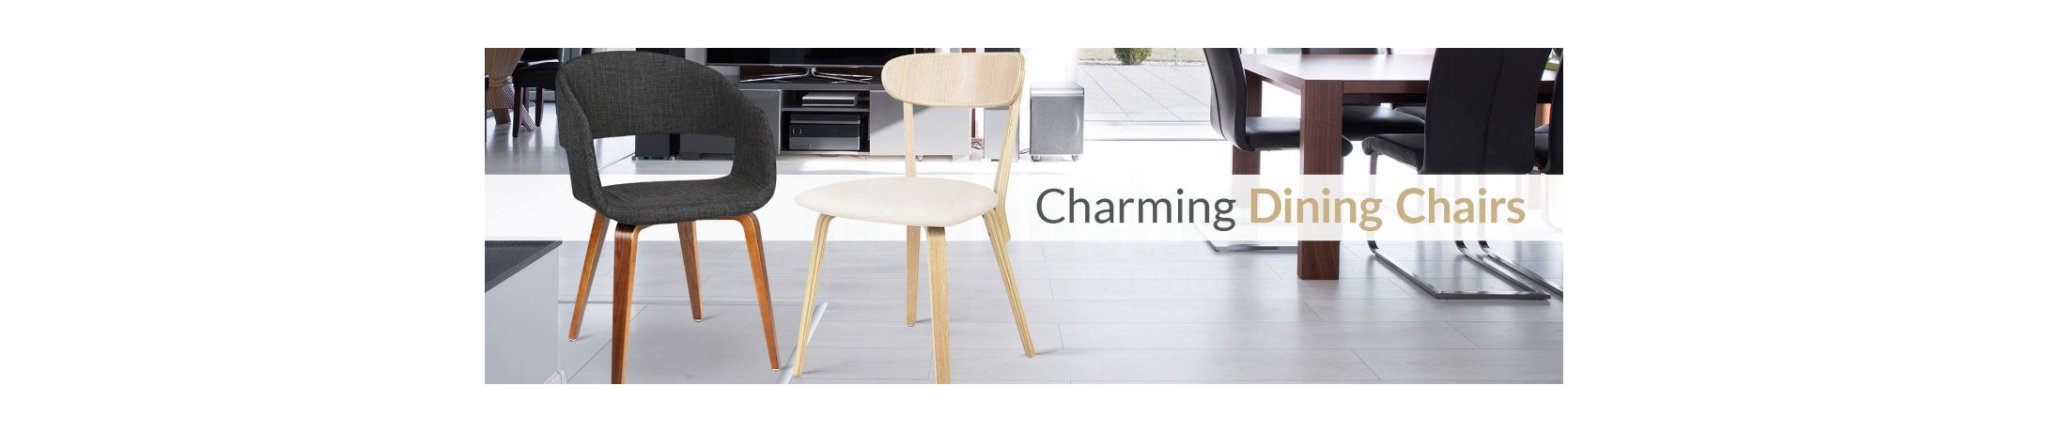 Kitchen & Dining Room Chairs - Newstart Furniture